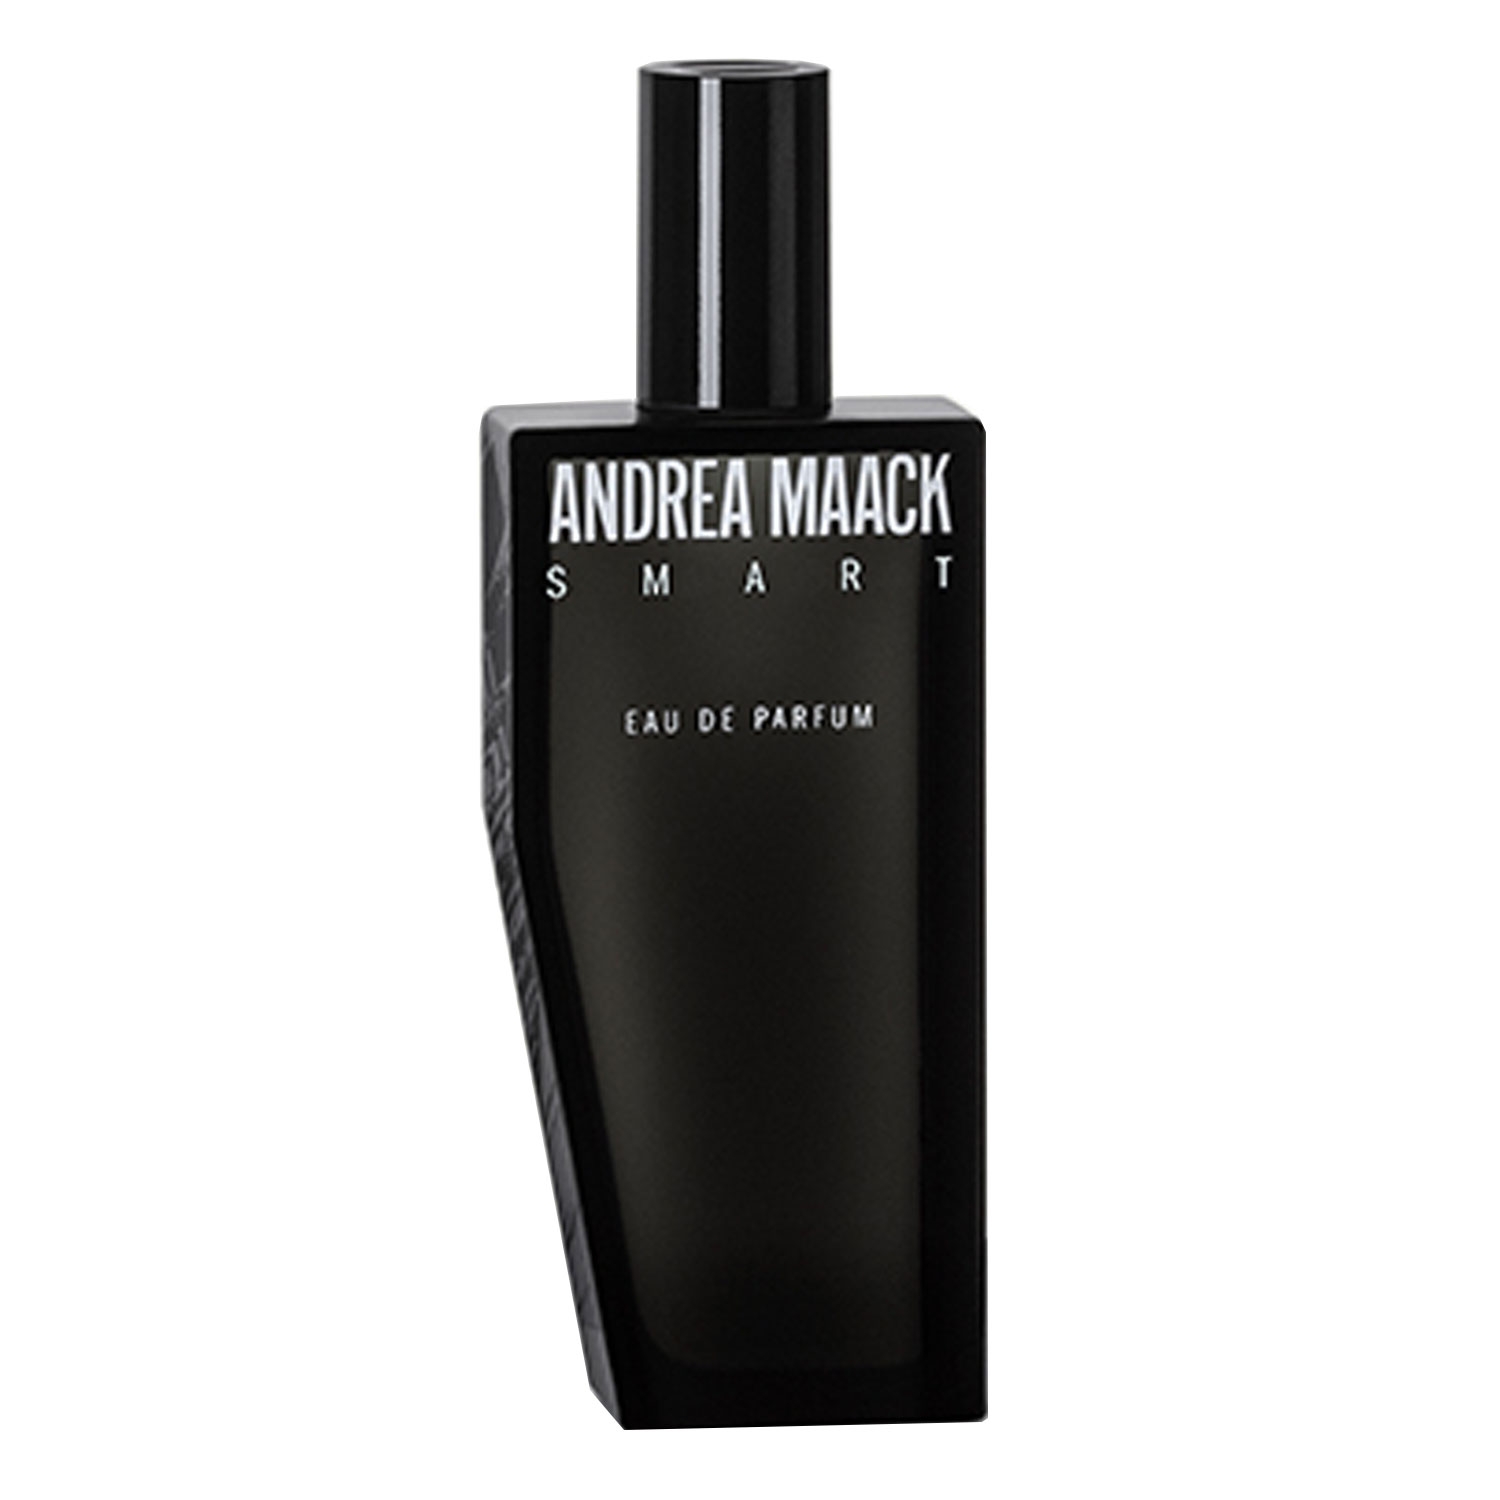 Produktbild von ANDREA MAACK - SMART Eau de Parfum